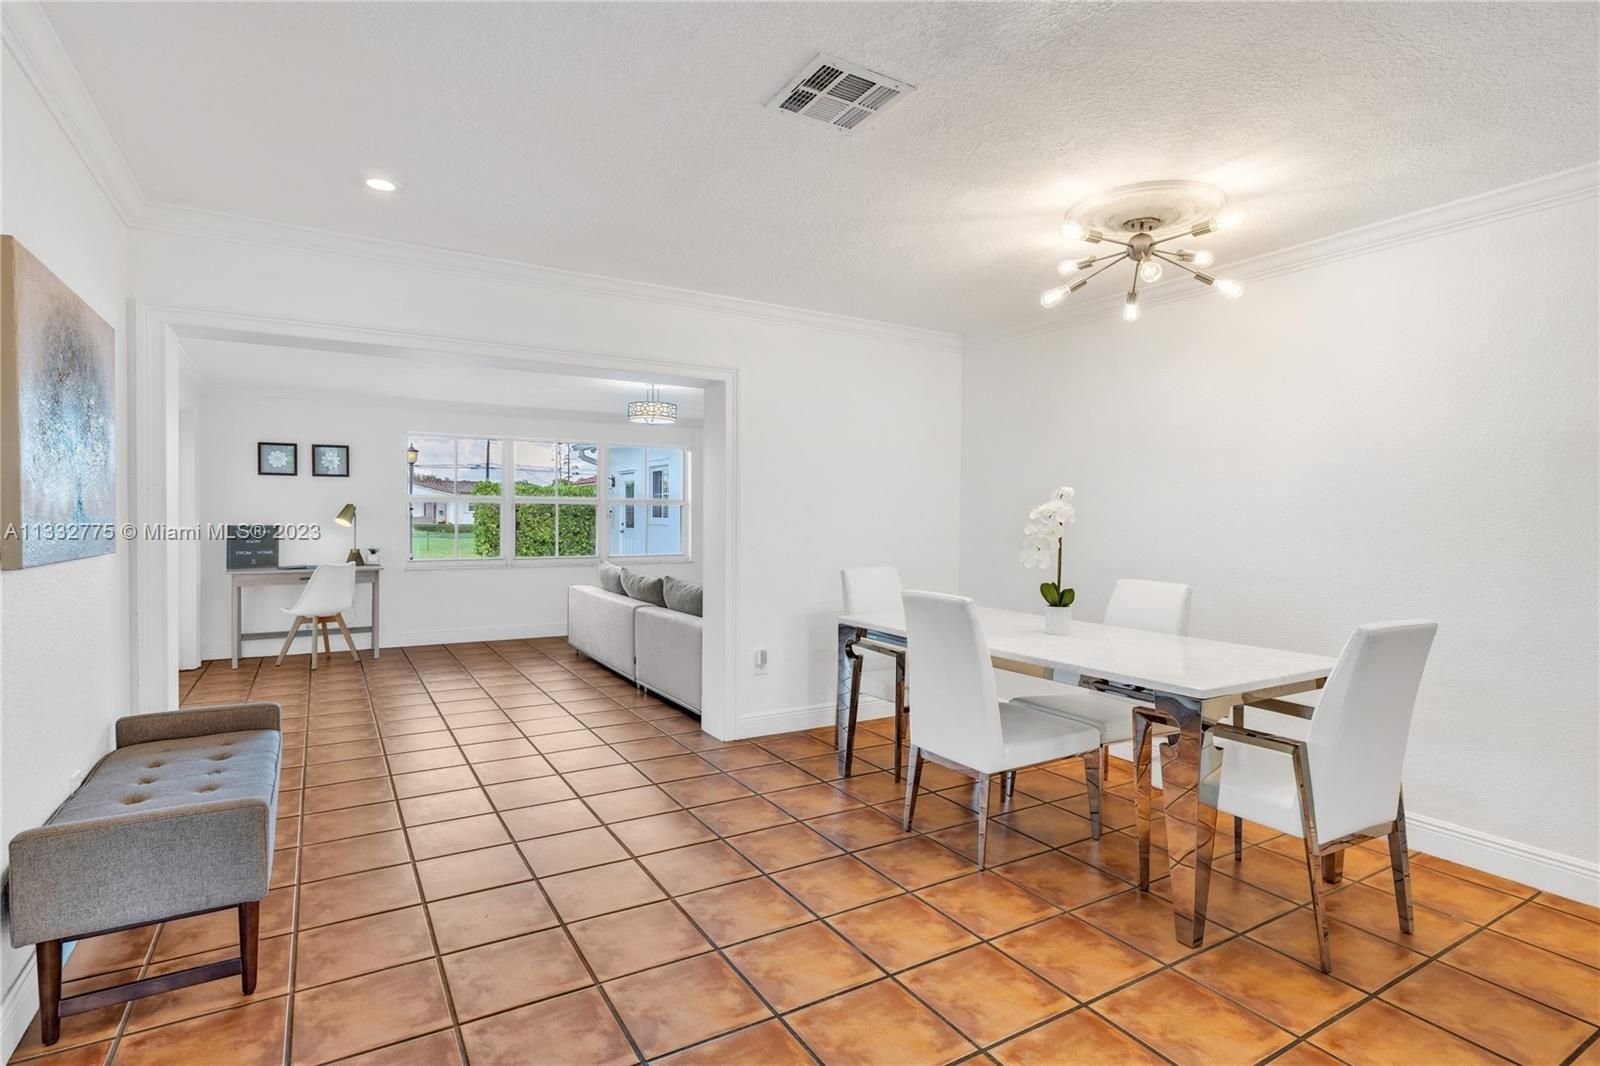 Real estate property located at 9271 16th St, Miami-Dade County, Miami, FL